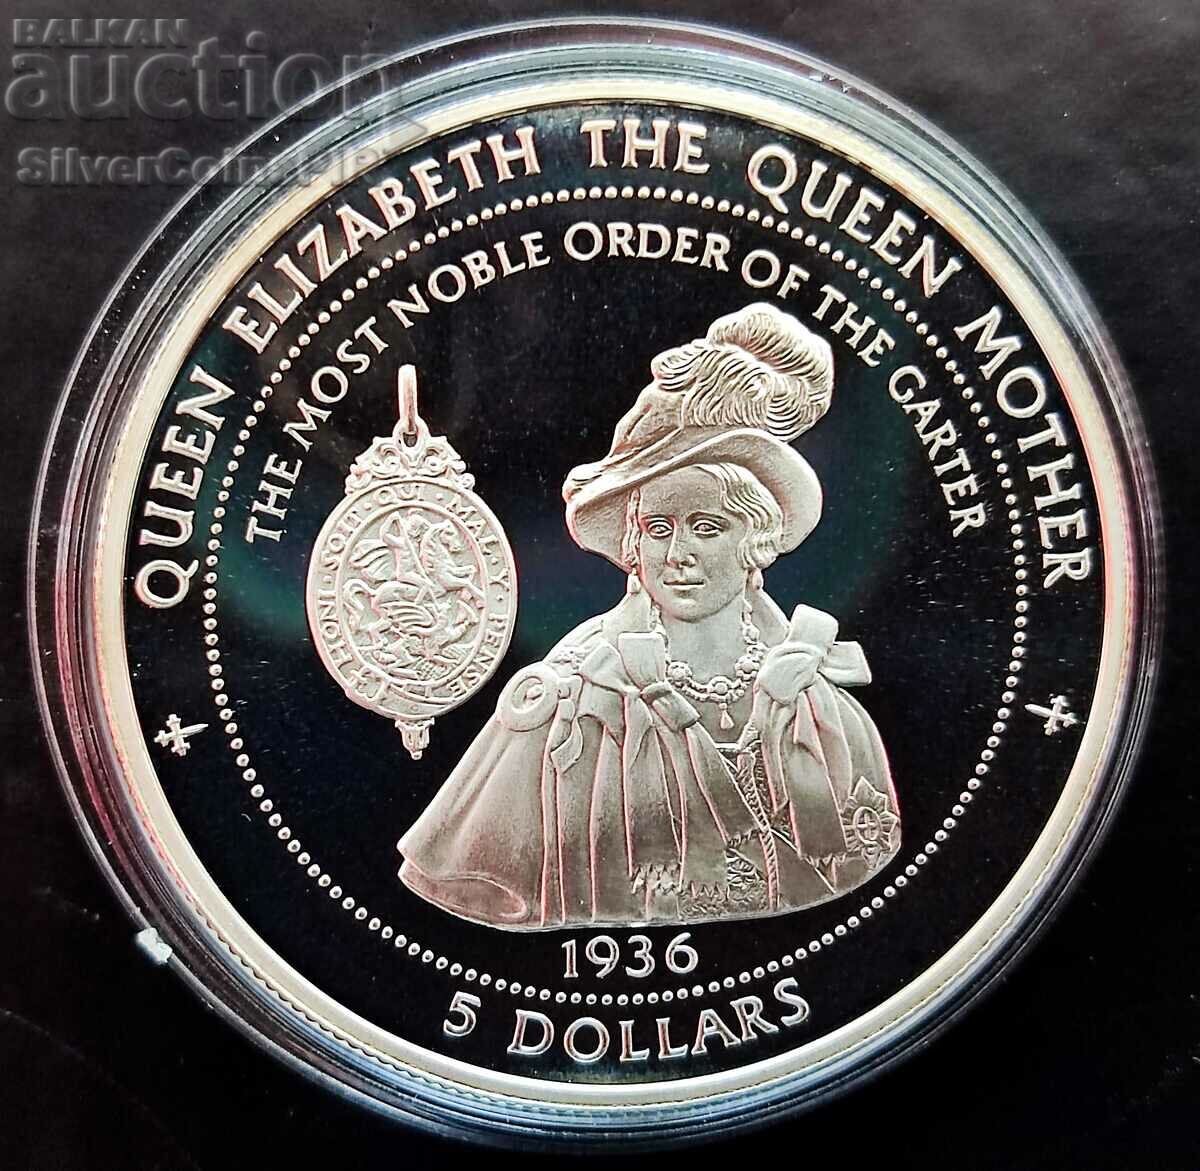 Silver 5 Dollars Highest Order 1997 Pitcairn Islands